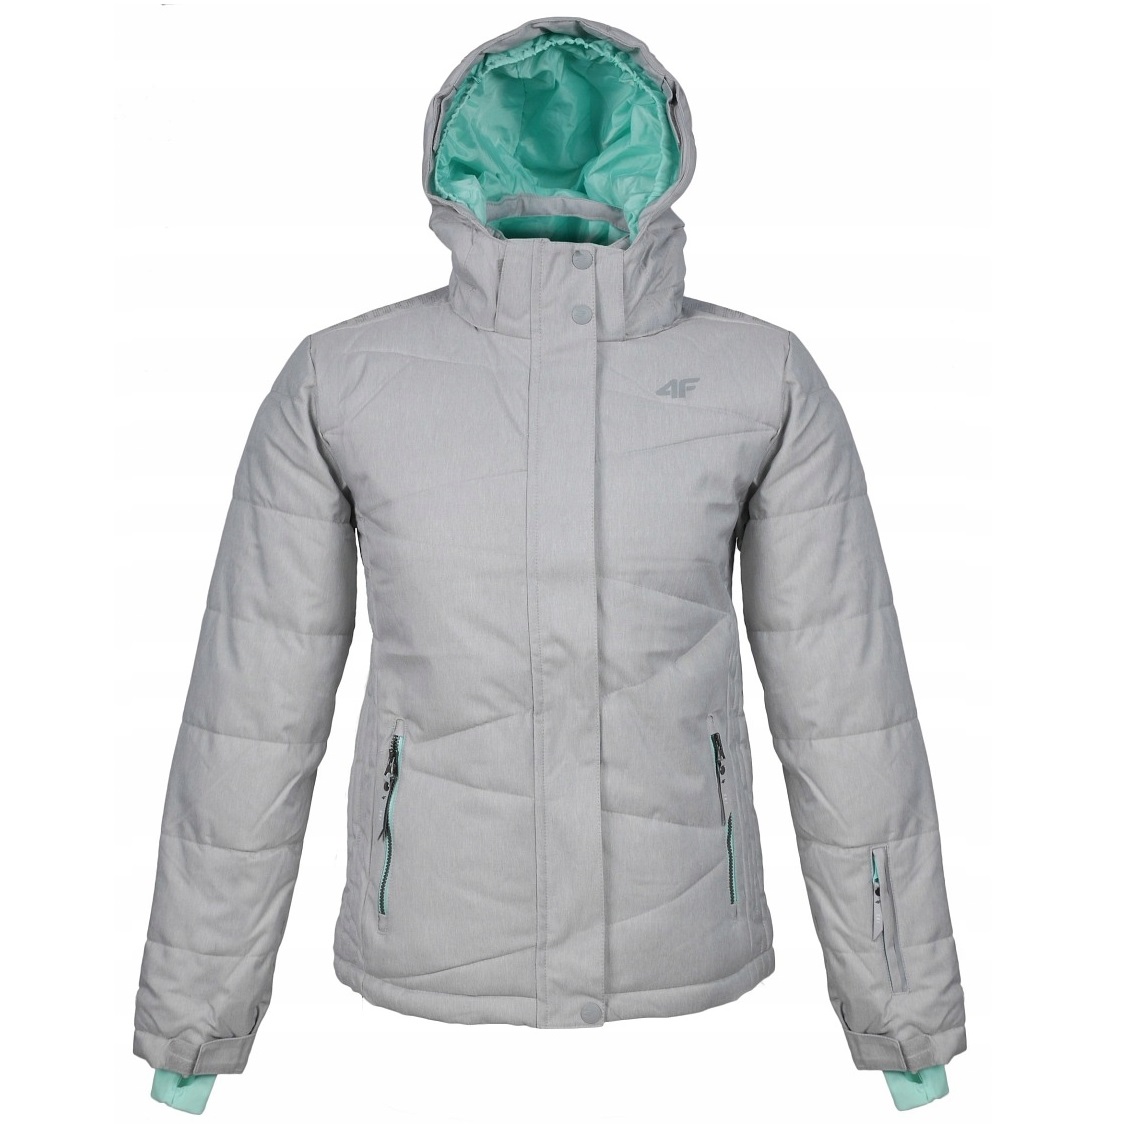 Geci Ski & Snow -  4f Girls Ski Jacket JKUDN001